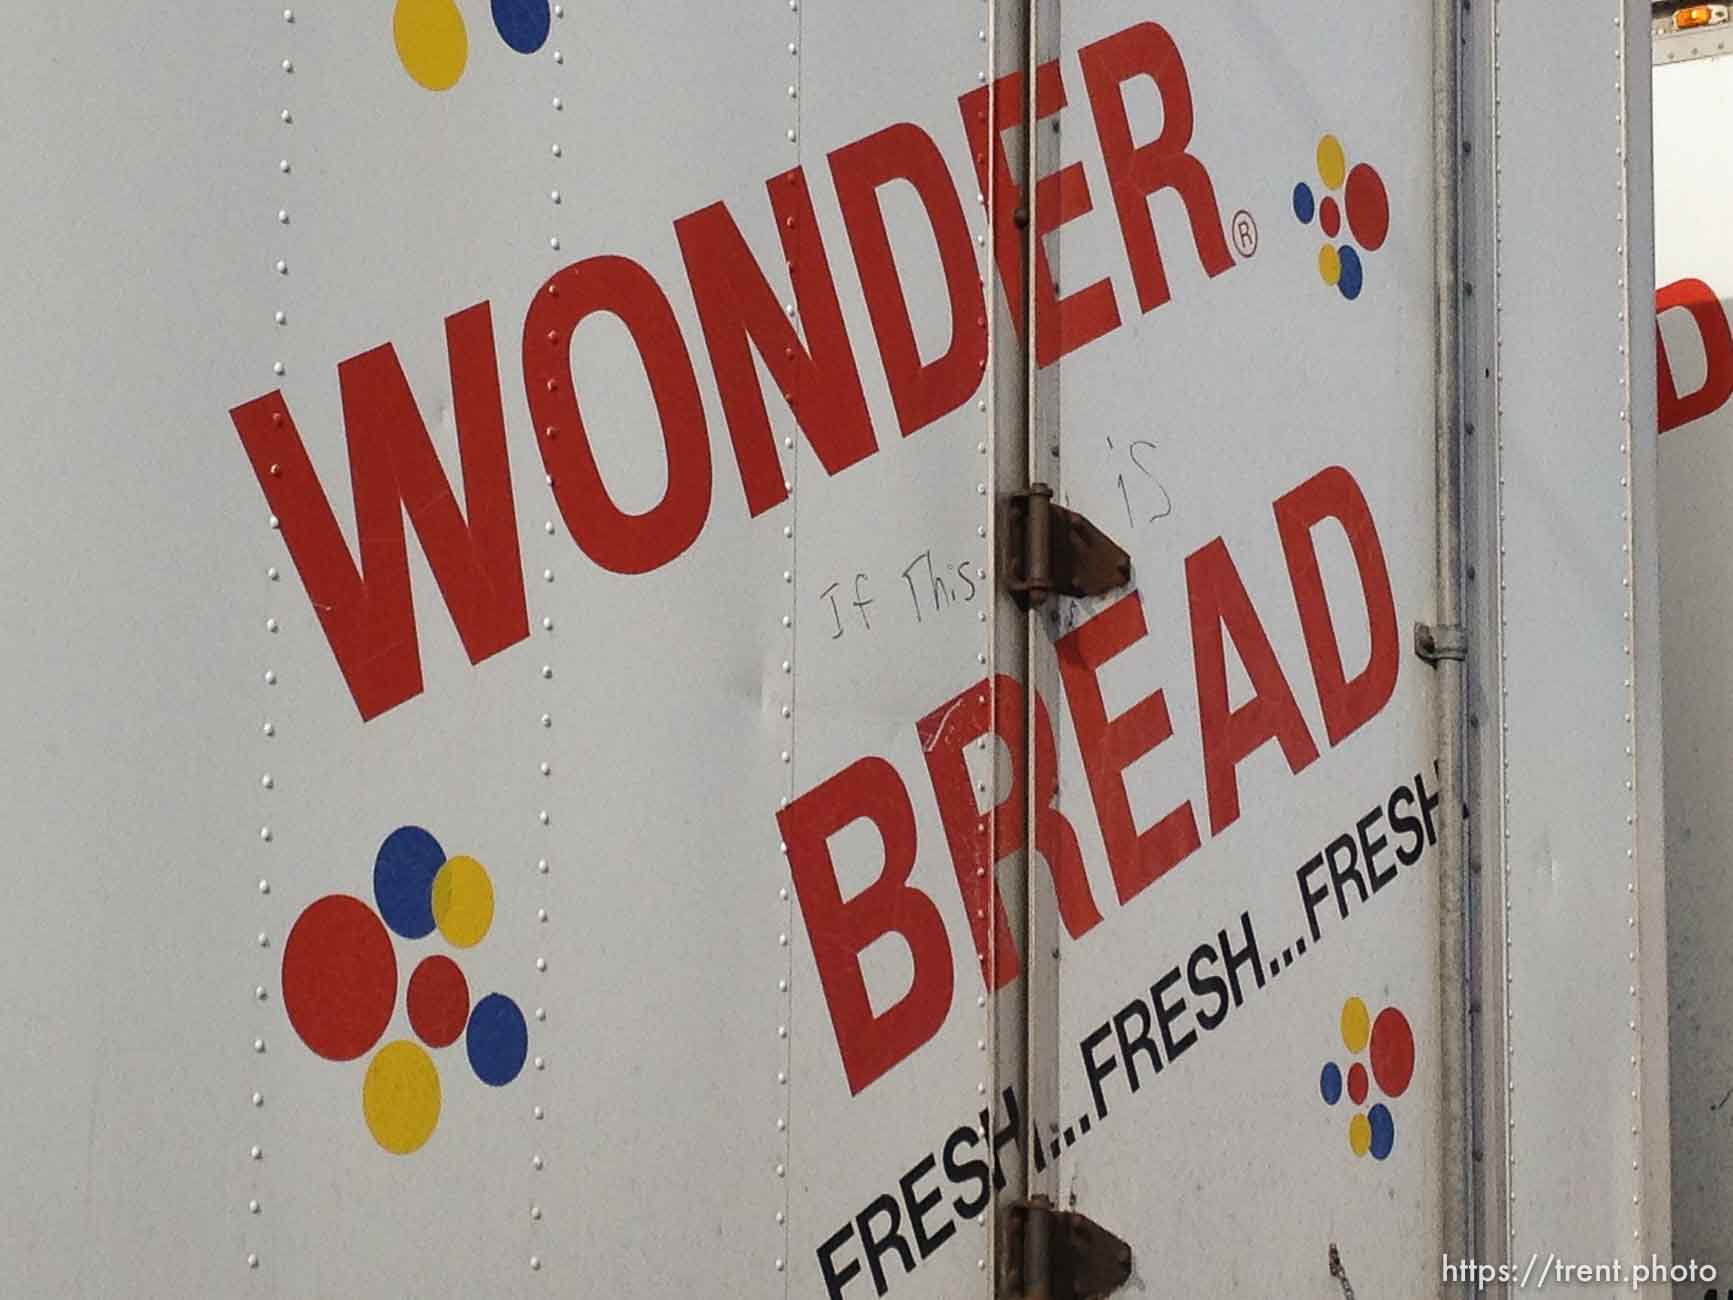 wonder if its bread